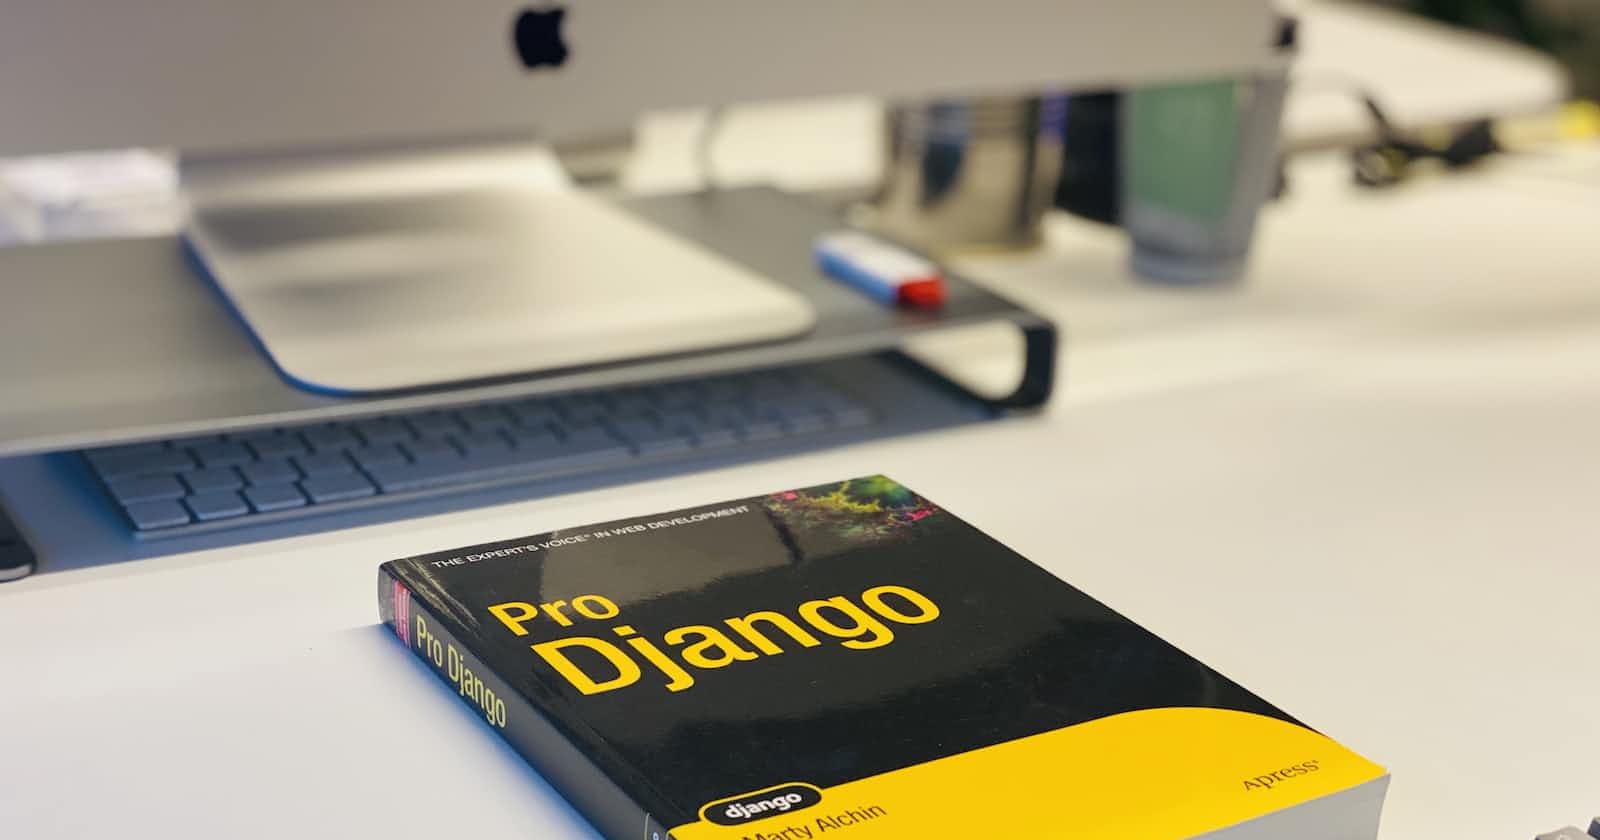 Basic Web App Using Django